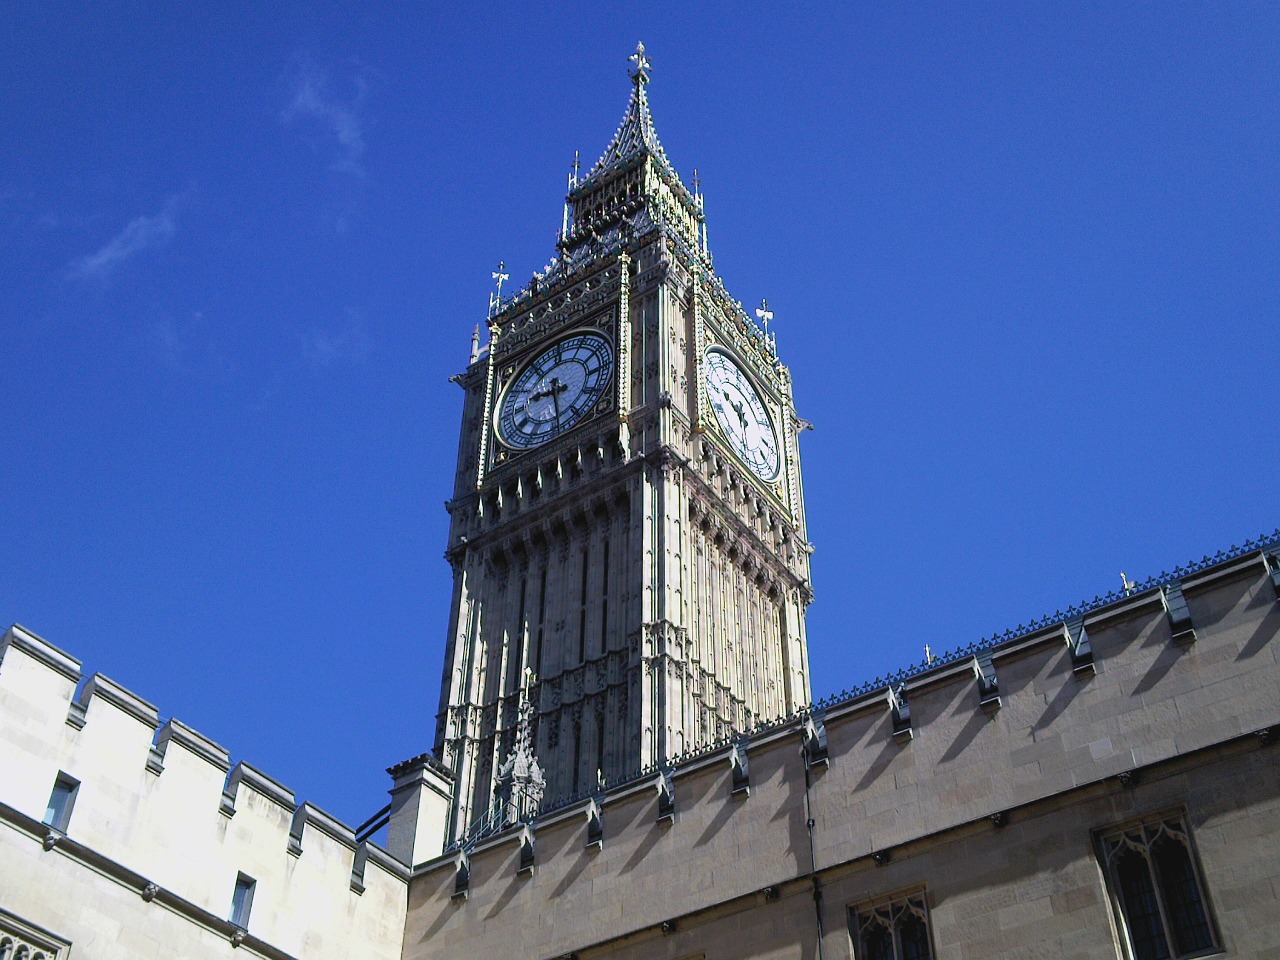 big ben clock london free photo